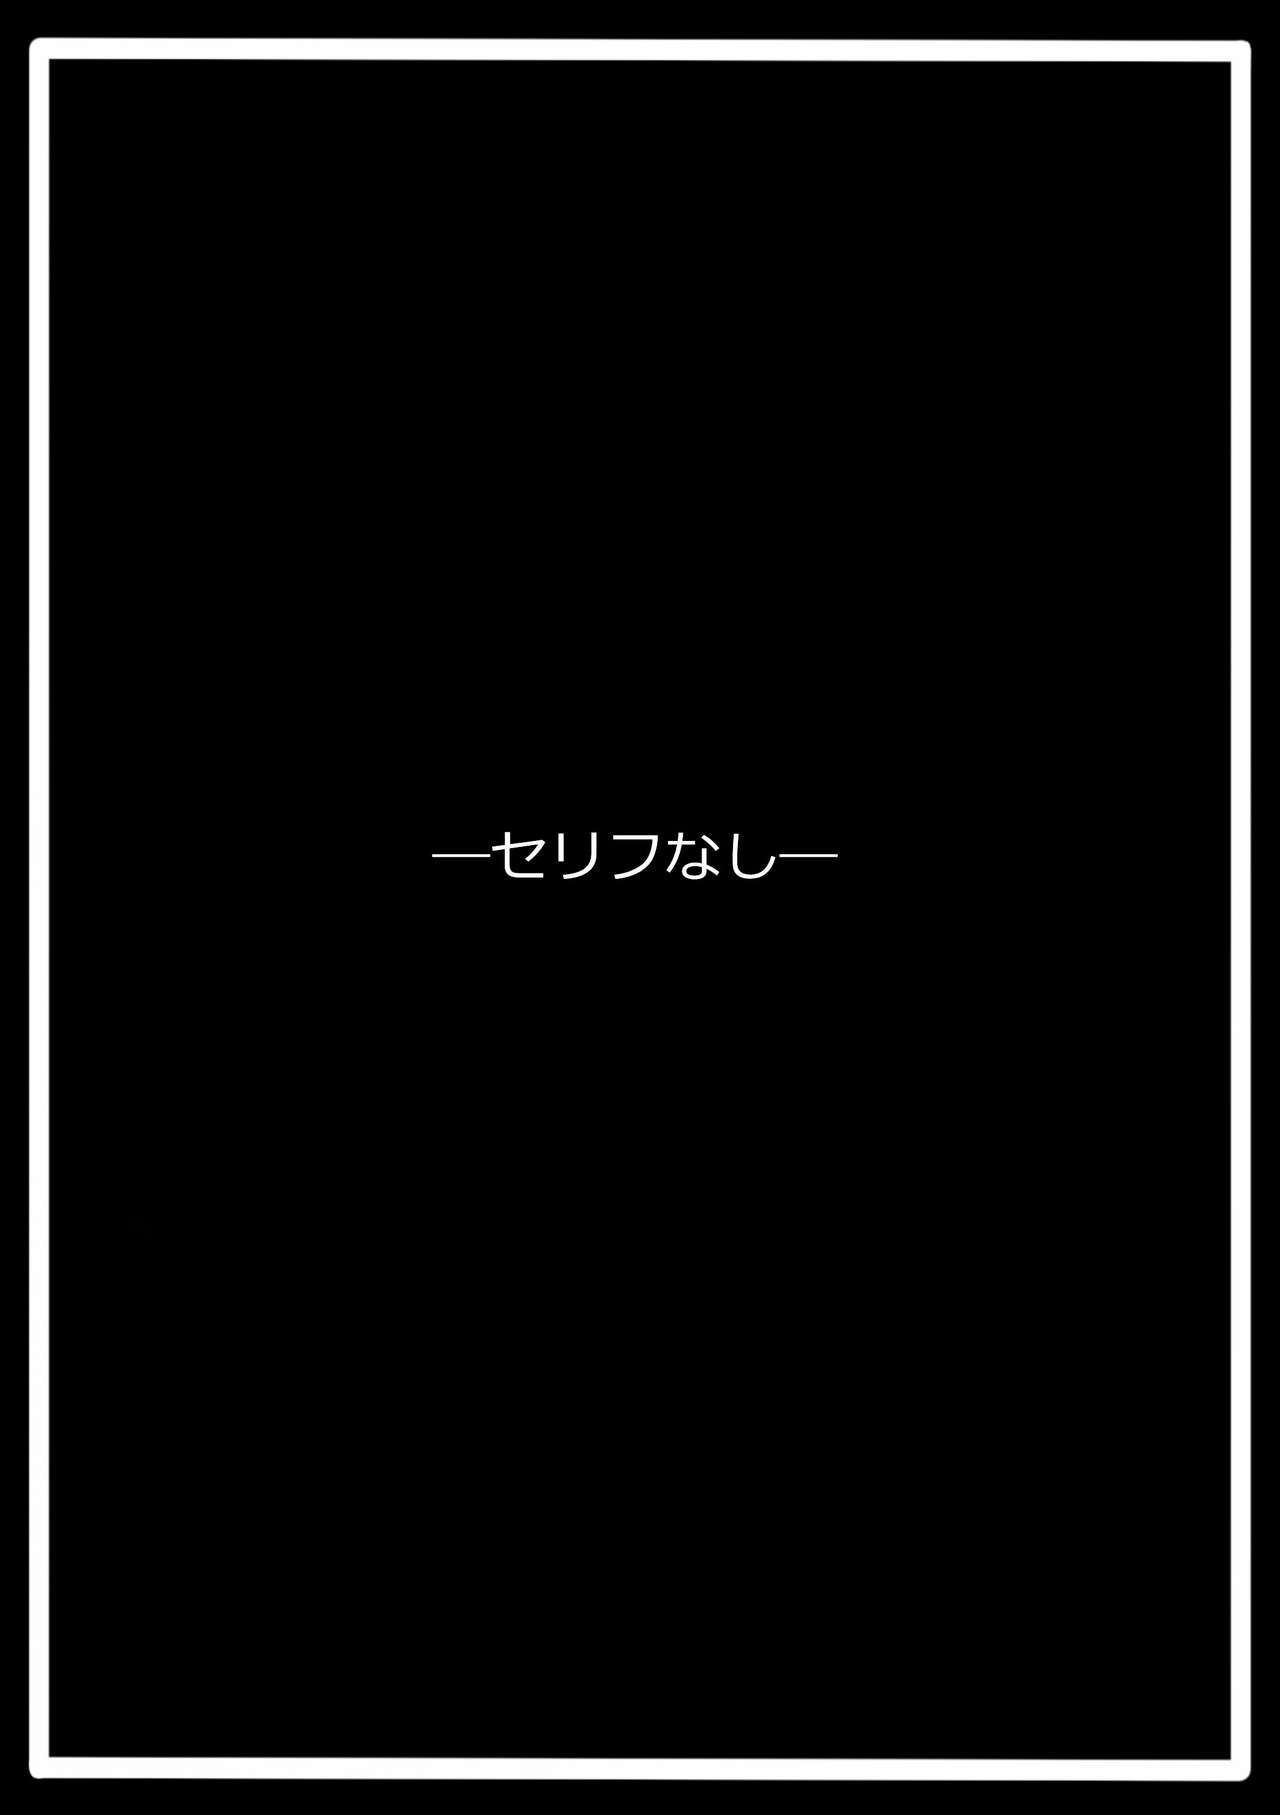 [Tyagama]『敗北・絶対自由戦士』ジニー・ナイツ (Imperial SaGa) [茶釜]『敗北・絶対自由戦士』ジニー・ナイツ (インペリアルサガ) 7